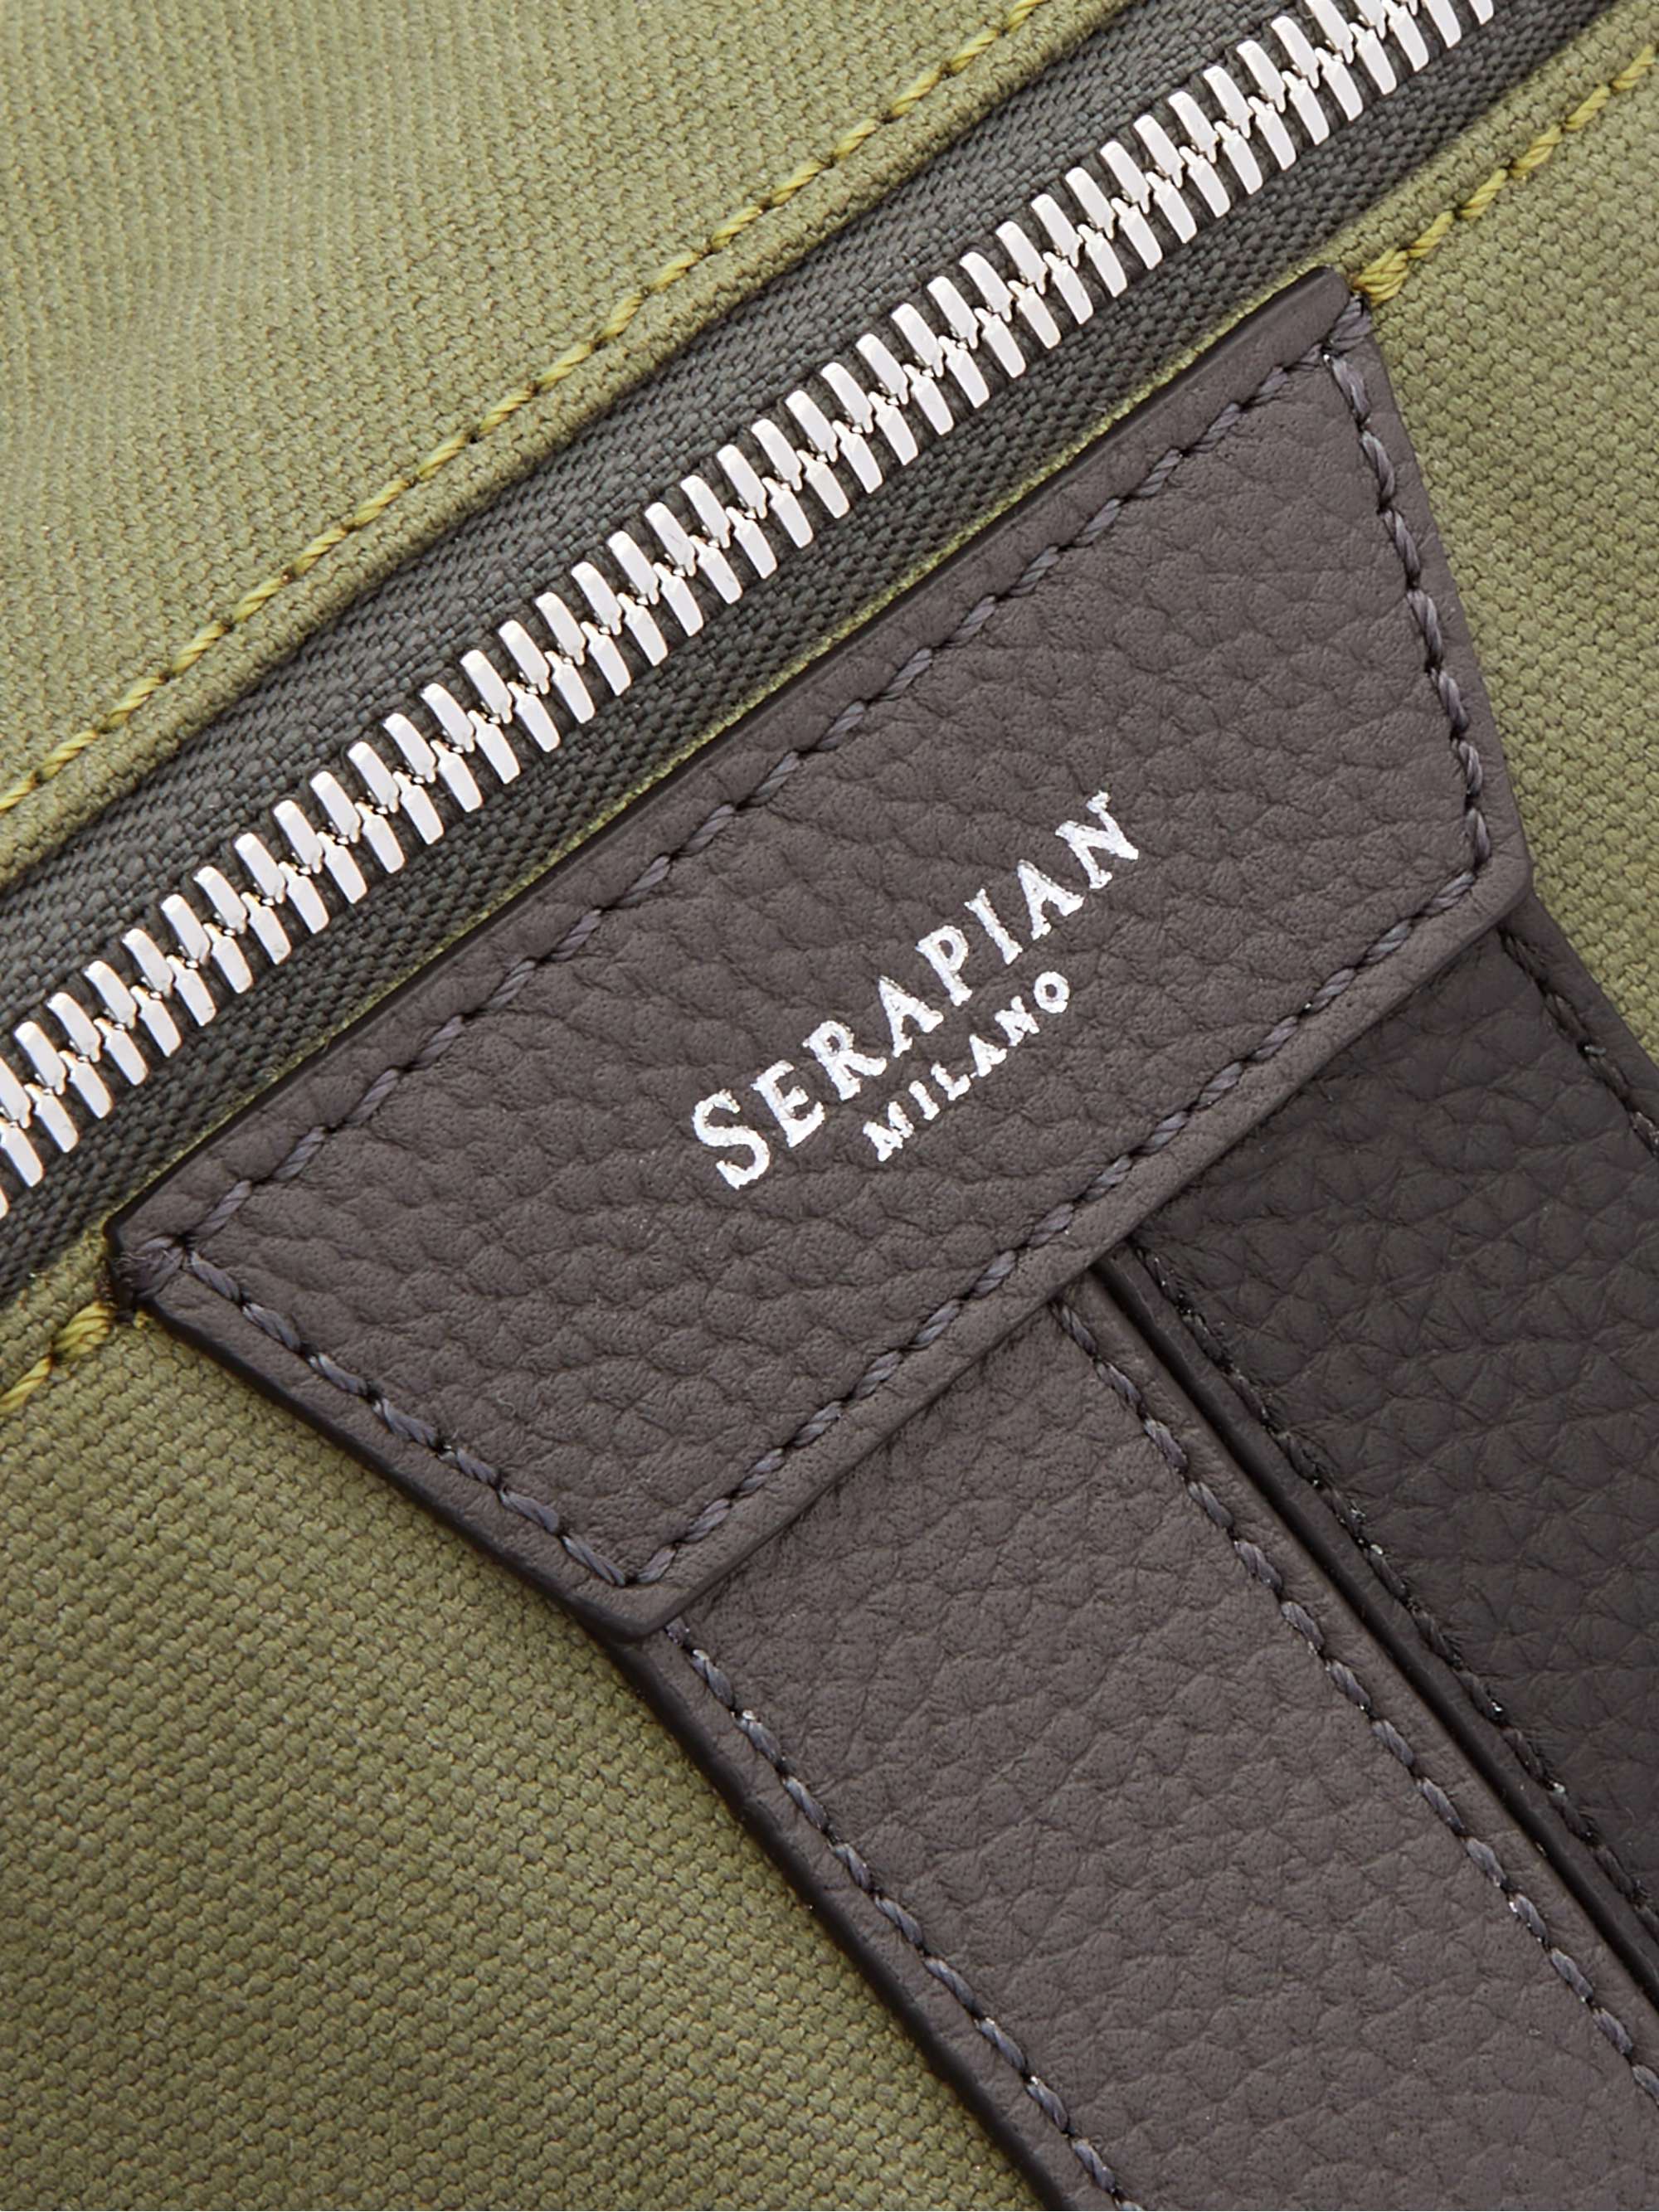 SERAPIAN Leather-Trimmed Canvas Belt Bag